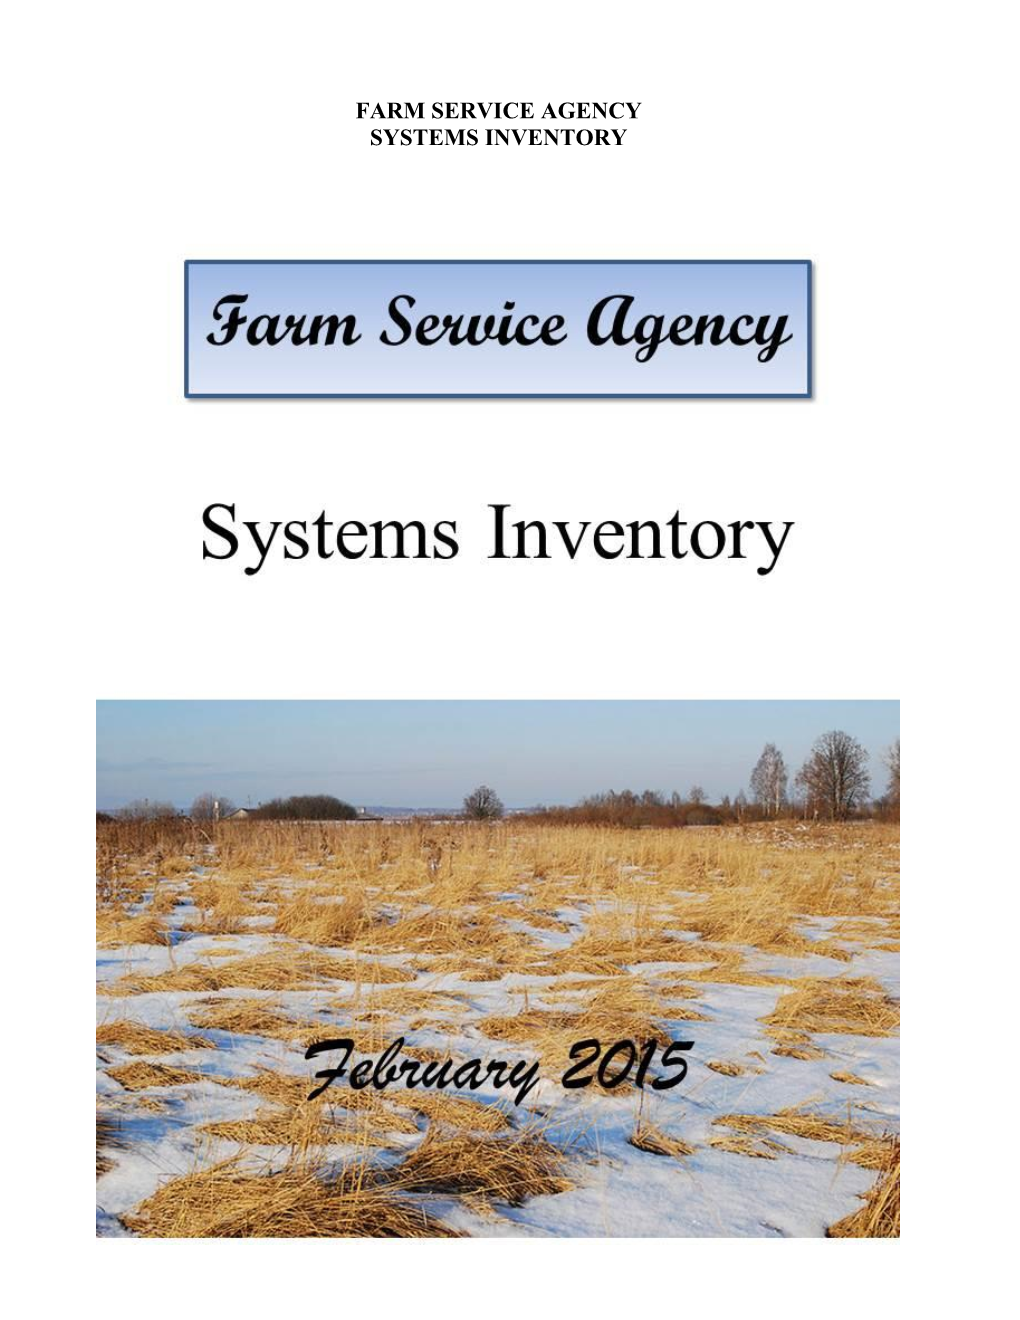 Farm Service Agency Systems Inventory